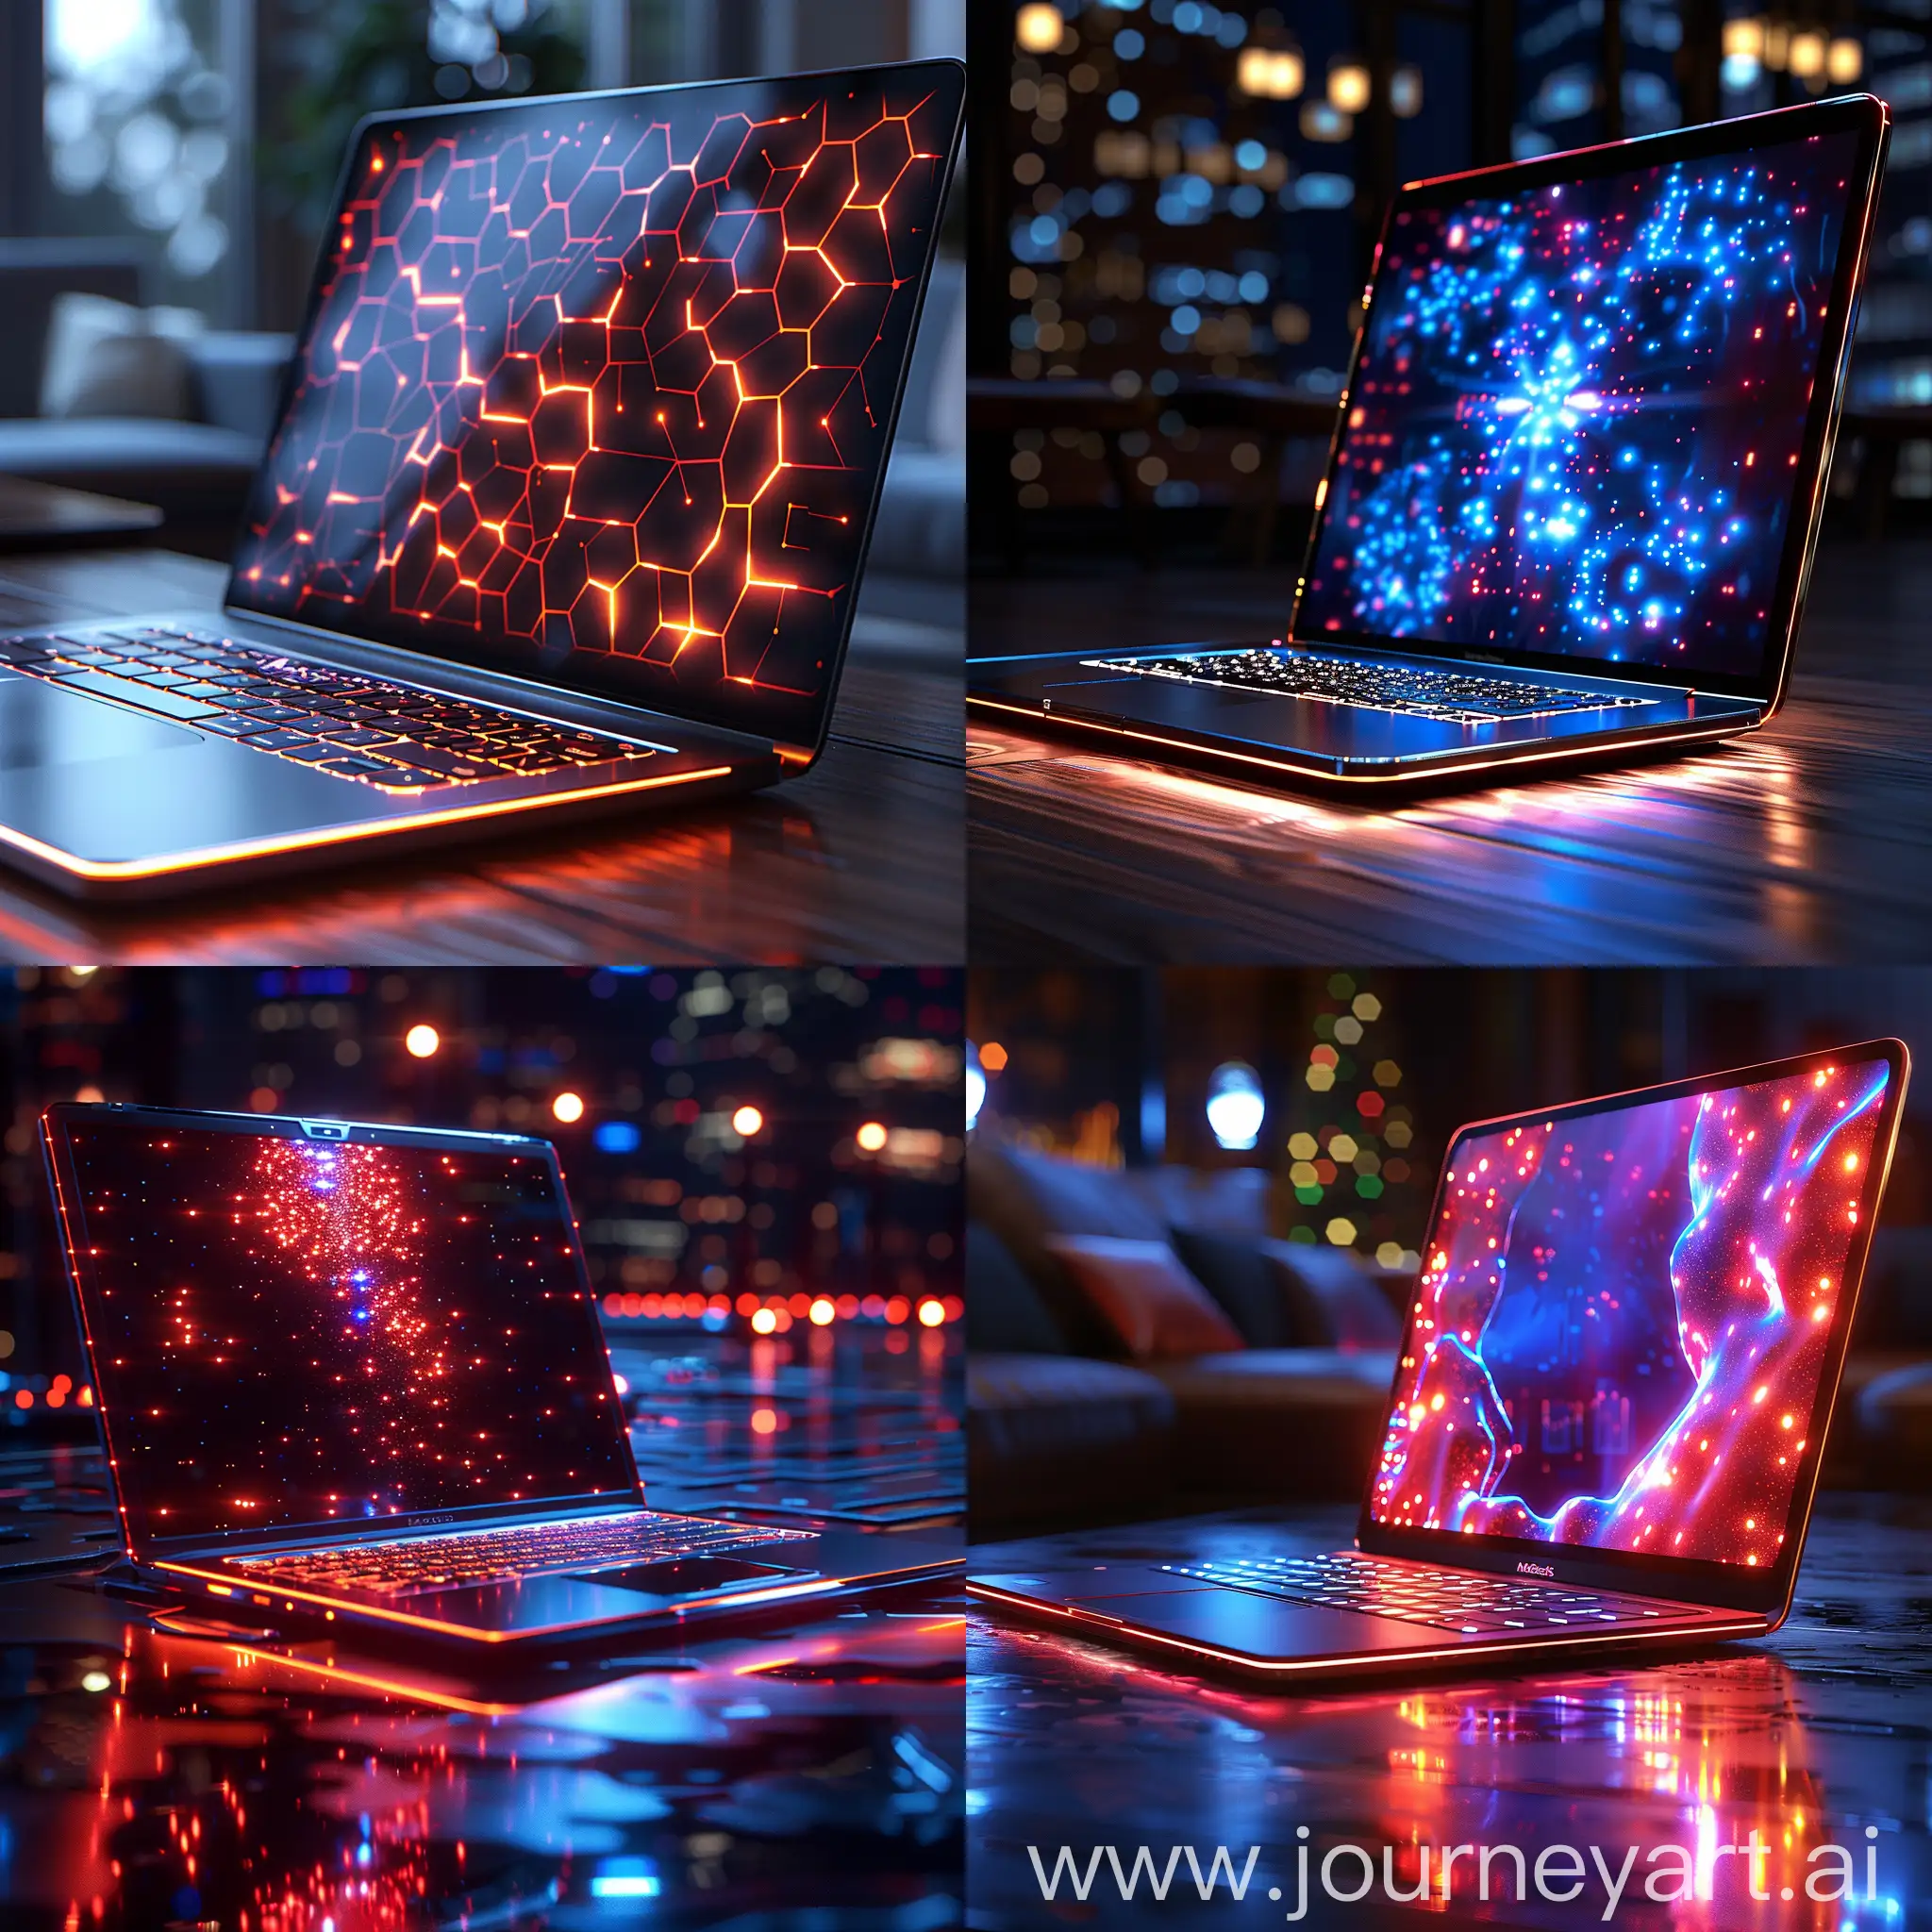 Futuristic laptop, ultra-modern, ultramodern, stainless steel, smart materials, graphene holographic projections, high tech, octane render --stylize 1000